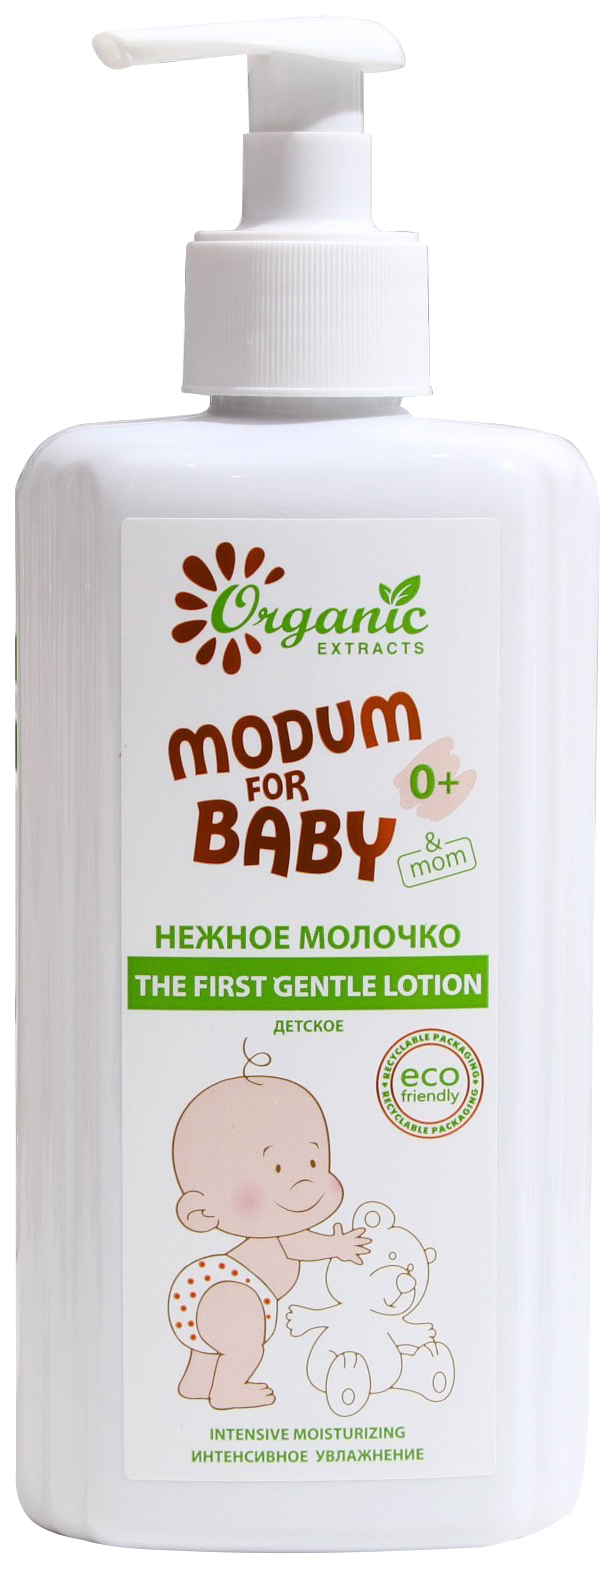 Нежное молочко Modum for baby Детское 0+ The first gentle lotion, 300 мл крем мыло modum for baby детское 0 the